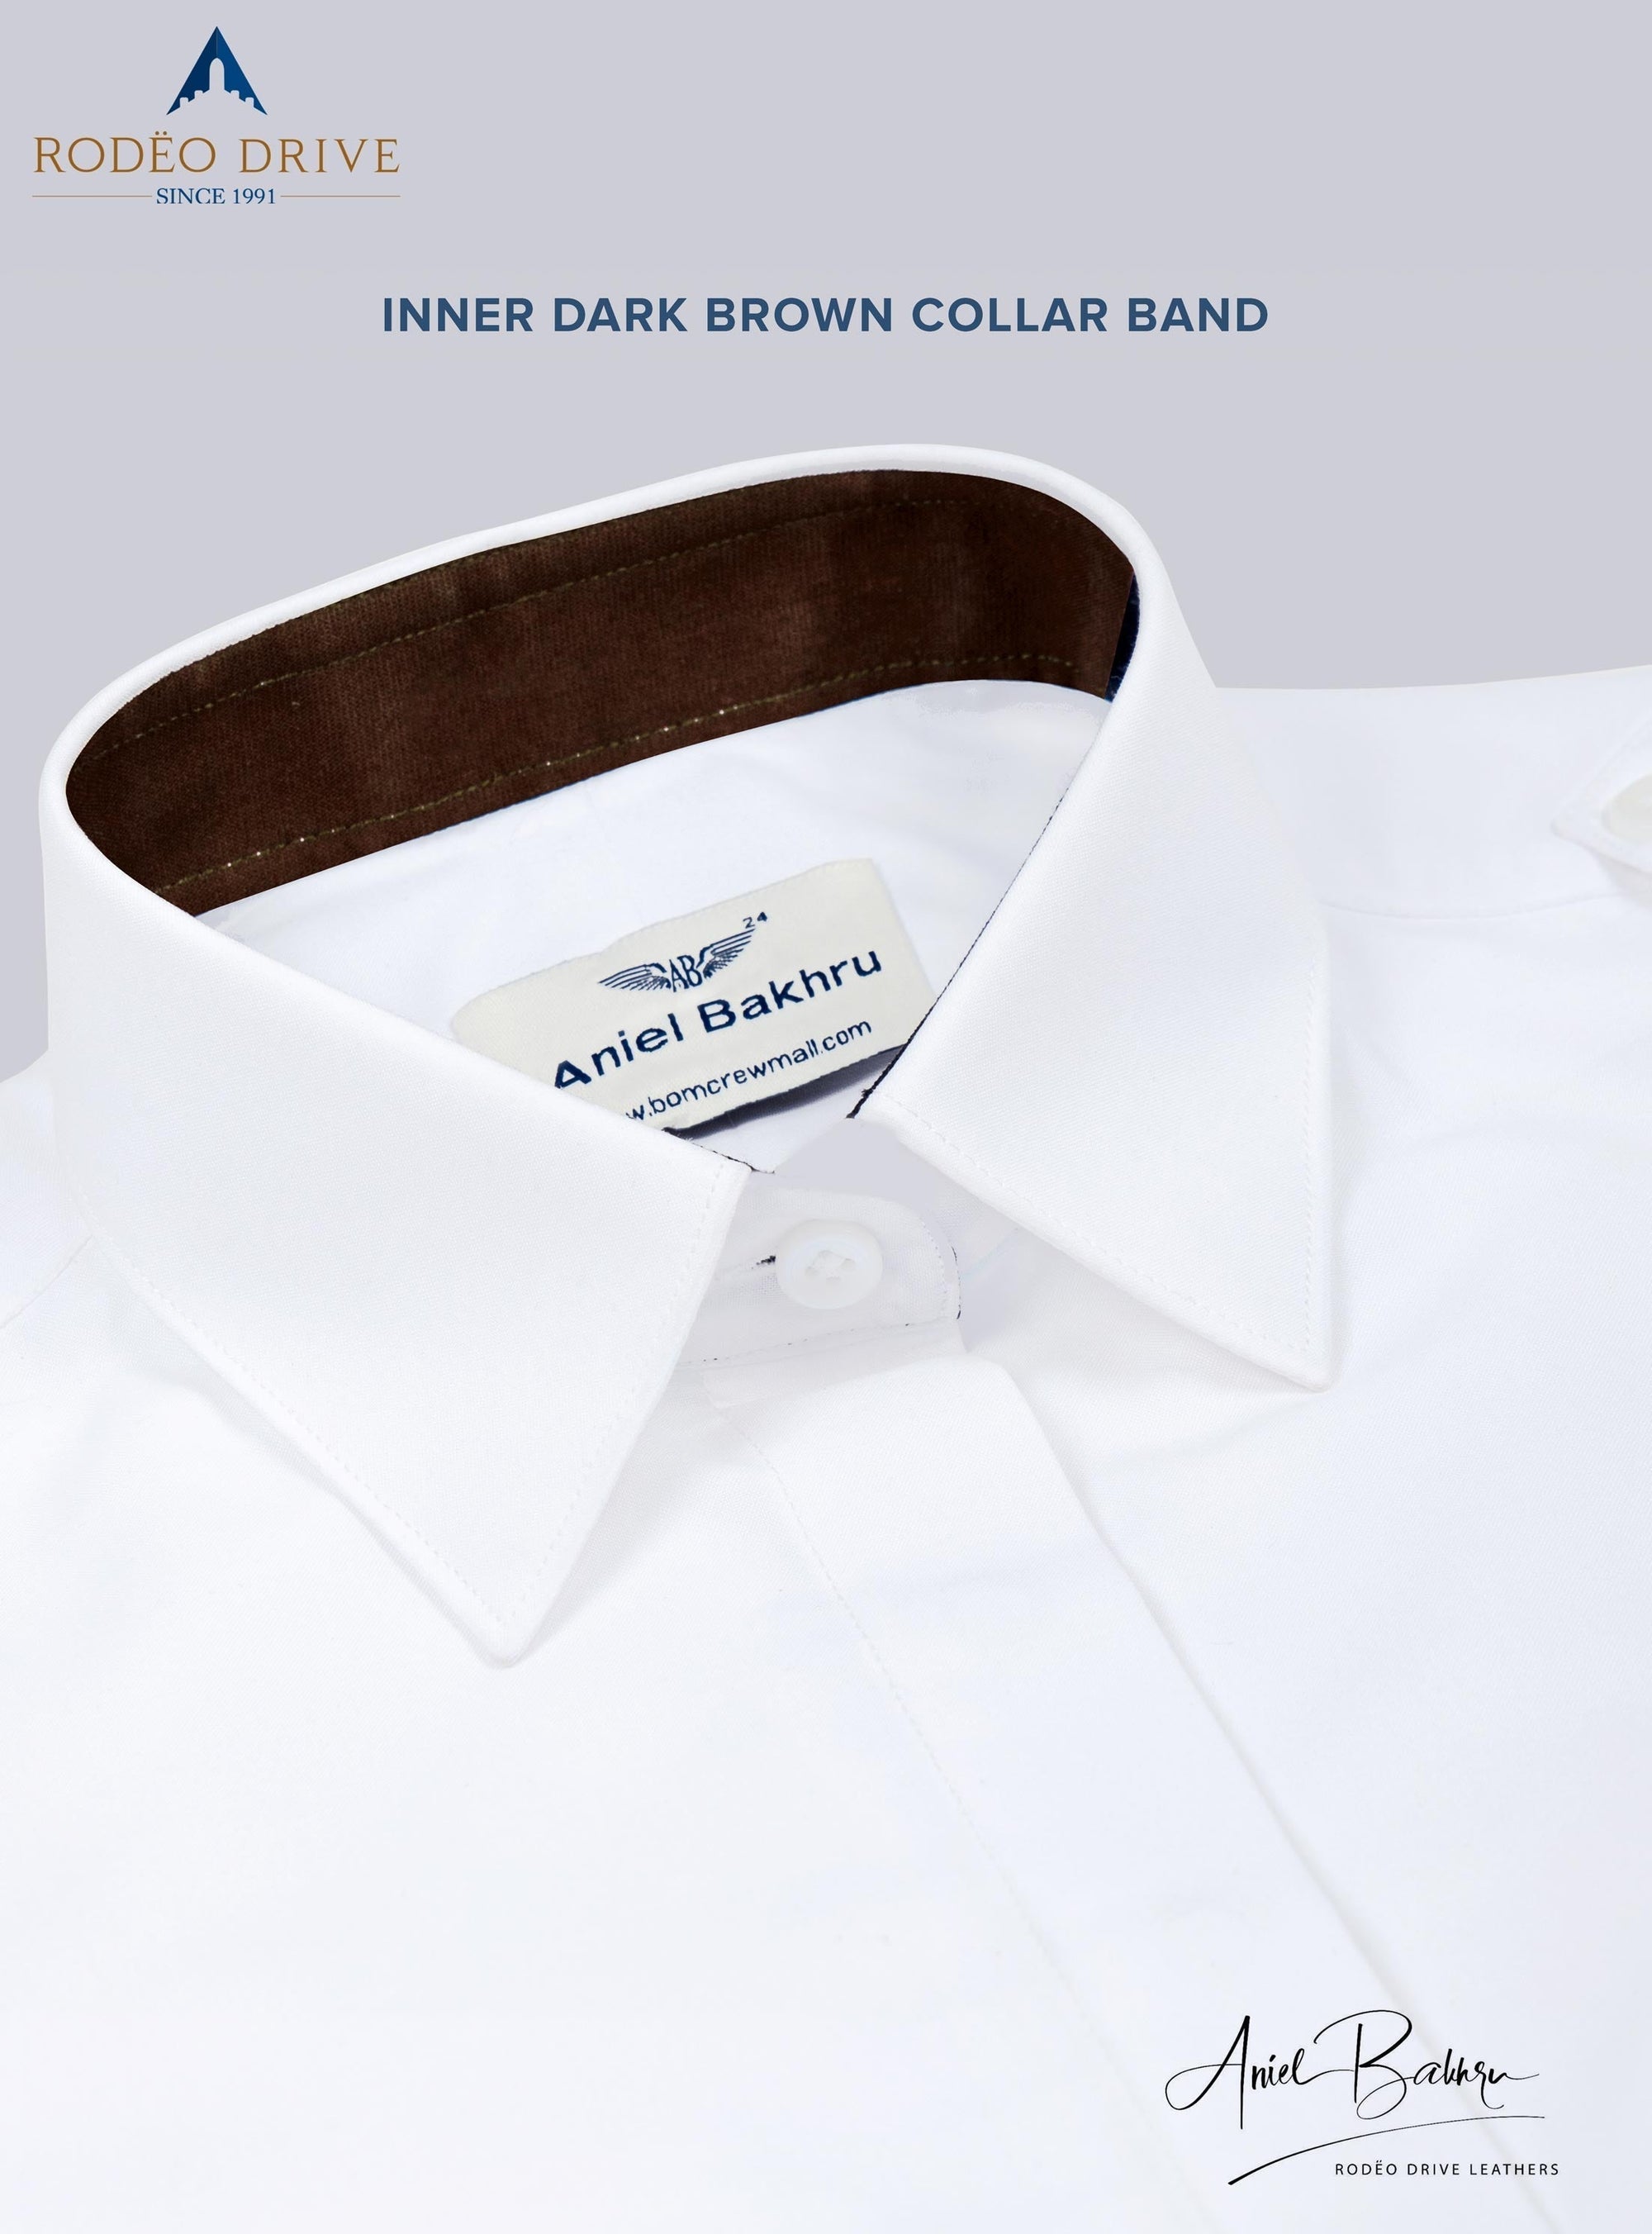 Inner dark brown collar band depicting image of Custom Women's Pilot shirt